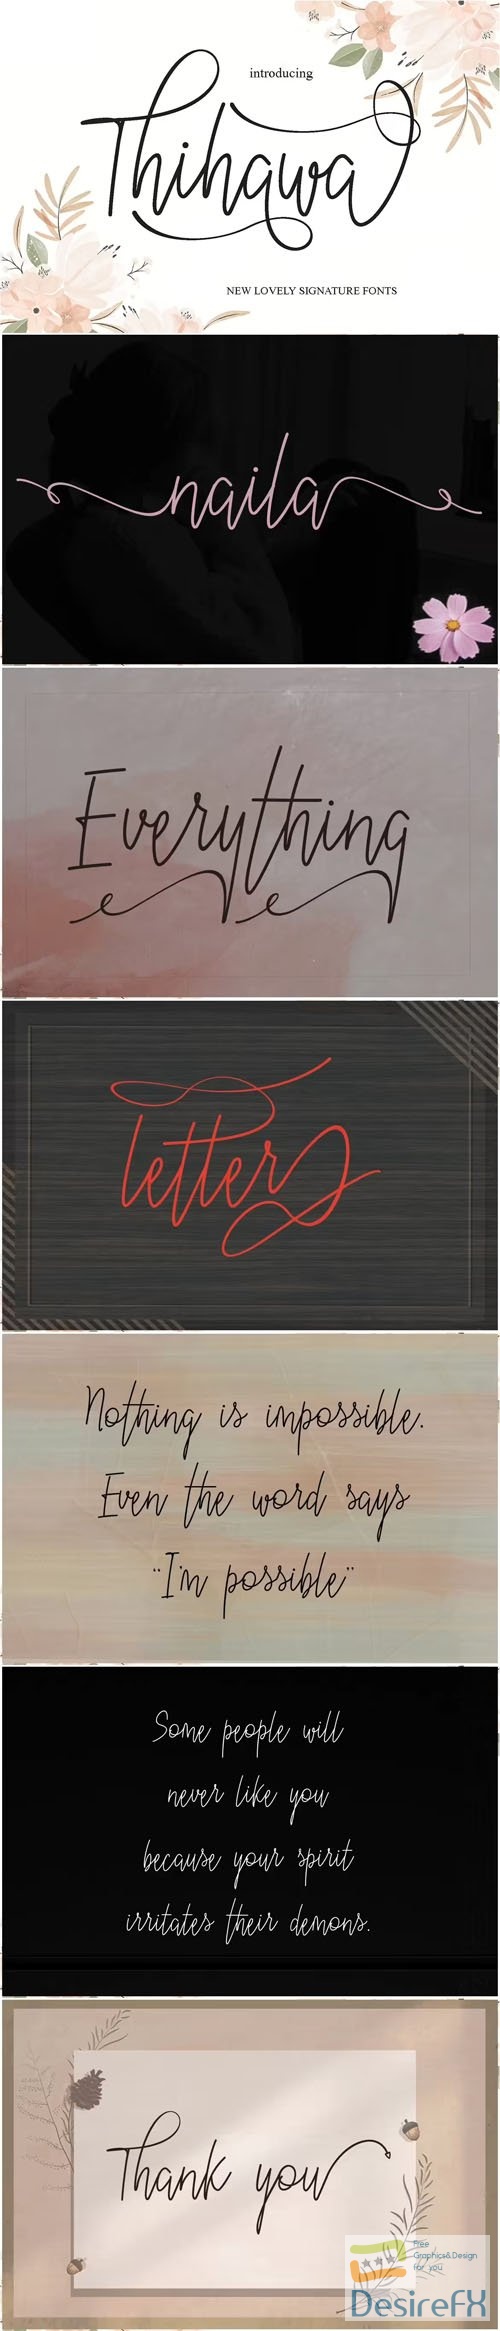 Thihawa Script - New Lovely Signature Font